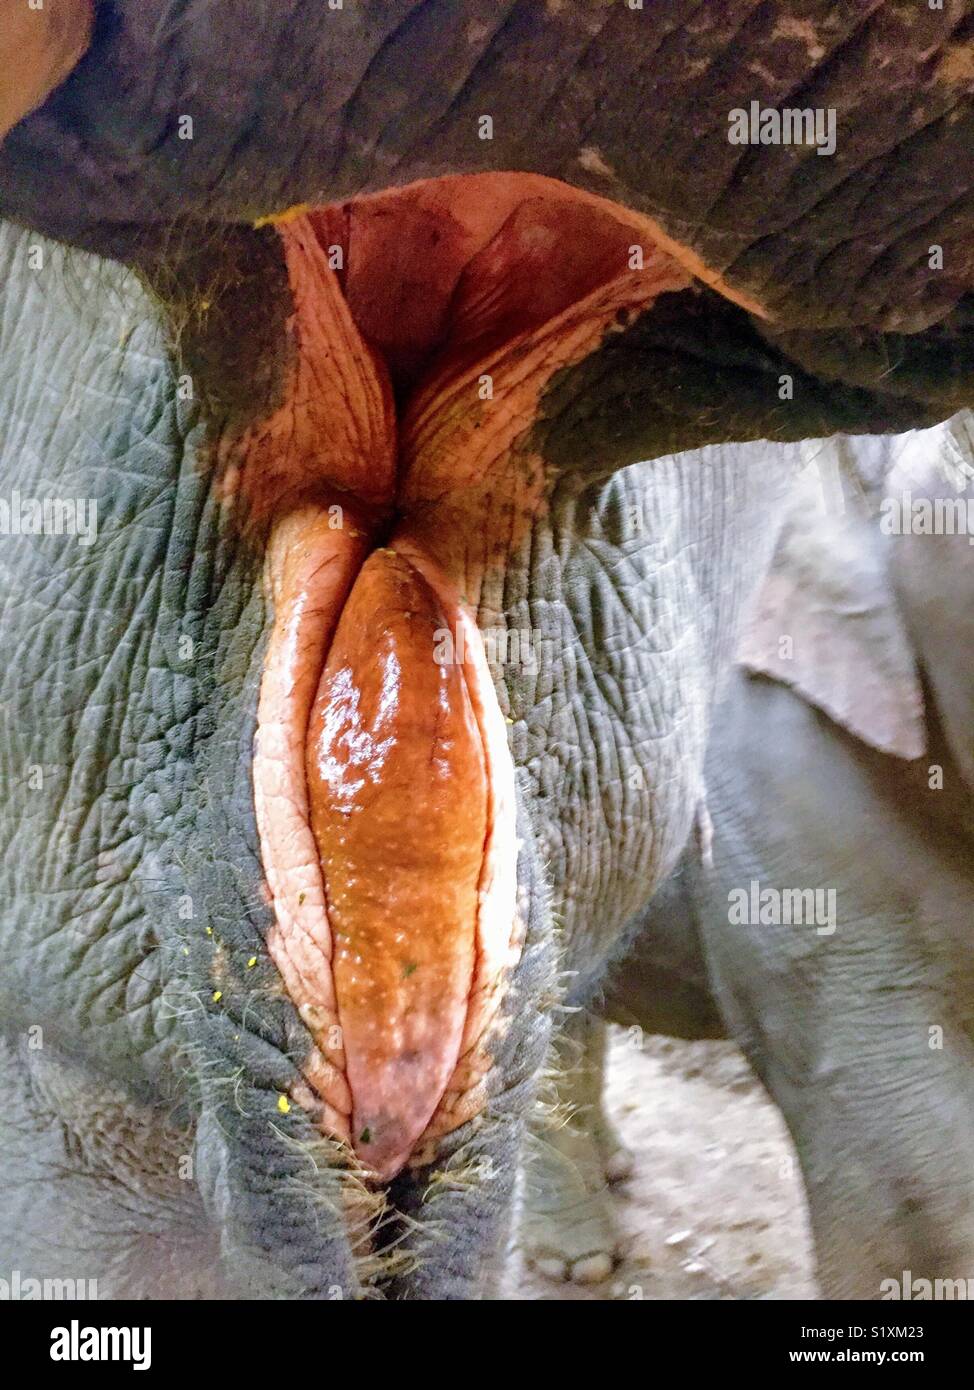 Inside an elephant’s mouth near Bangkok, Thailand Stock Photo